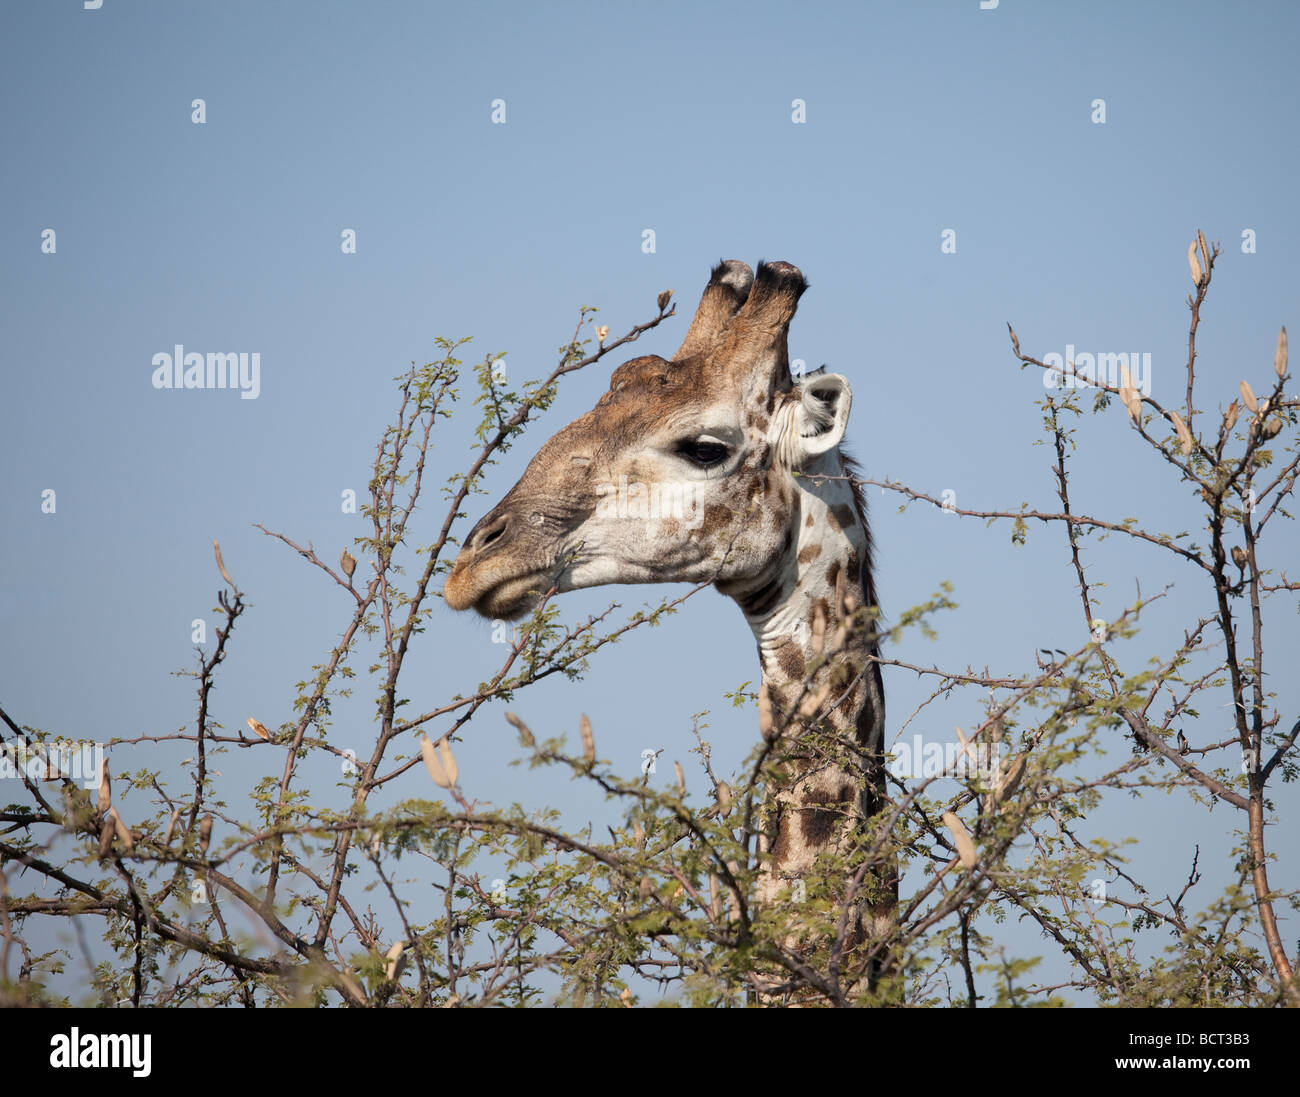 Macho Jirafa Sudafricano cabeza mirando a través de una acacia Foto de stock